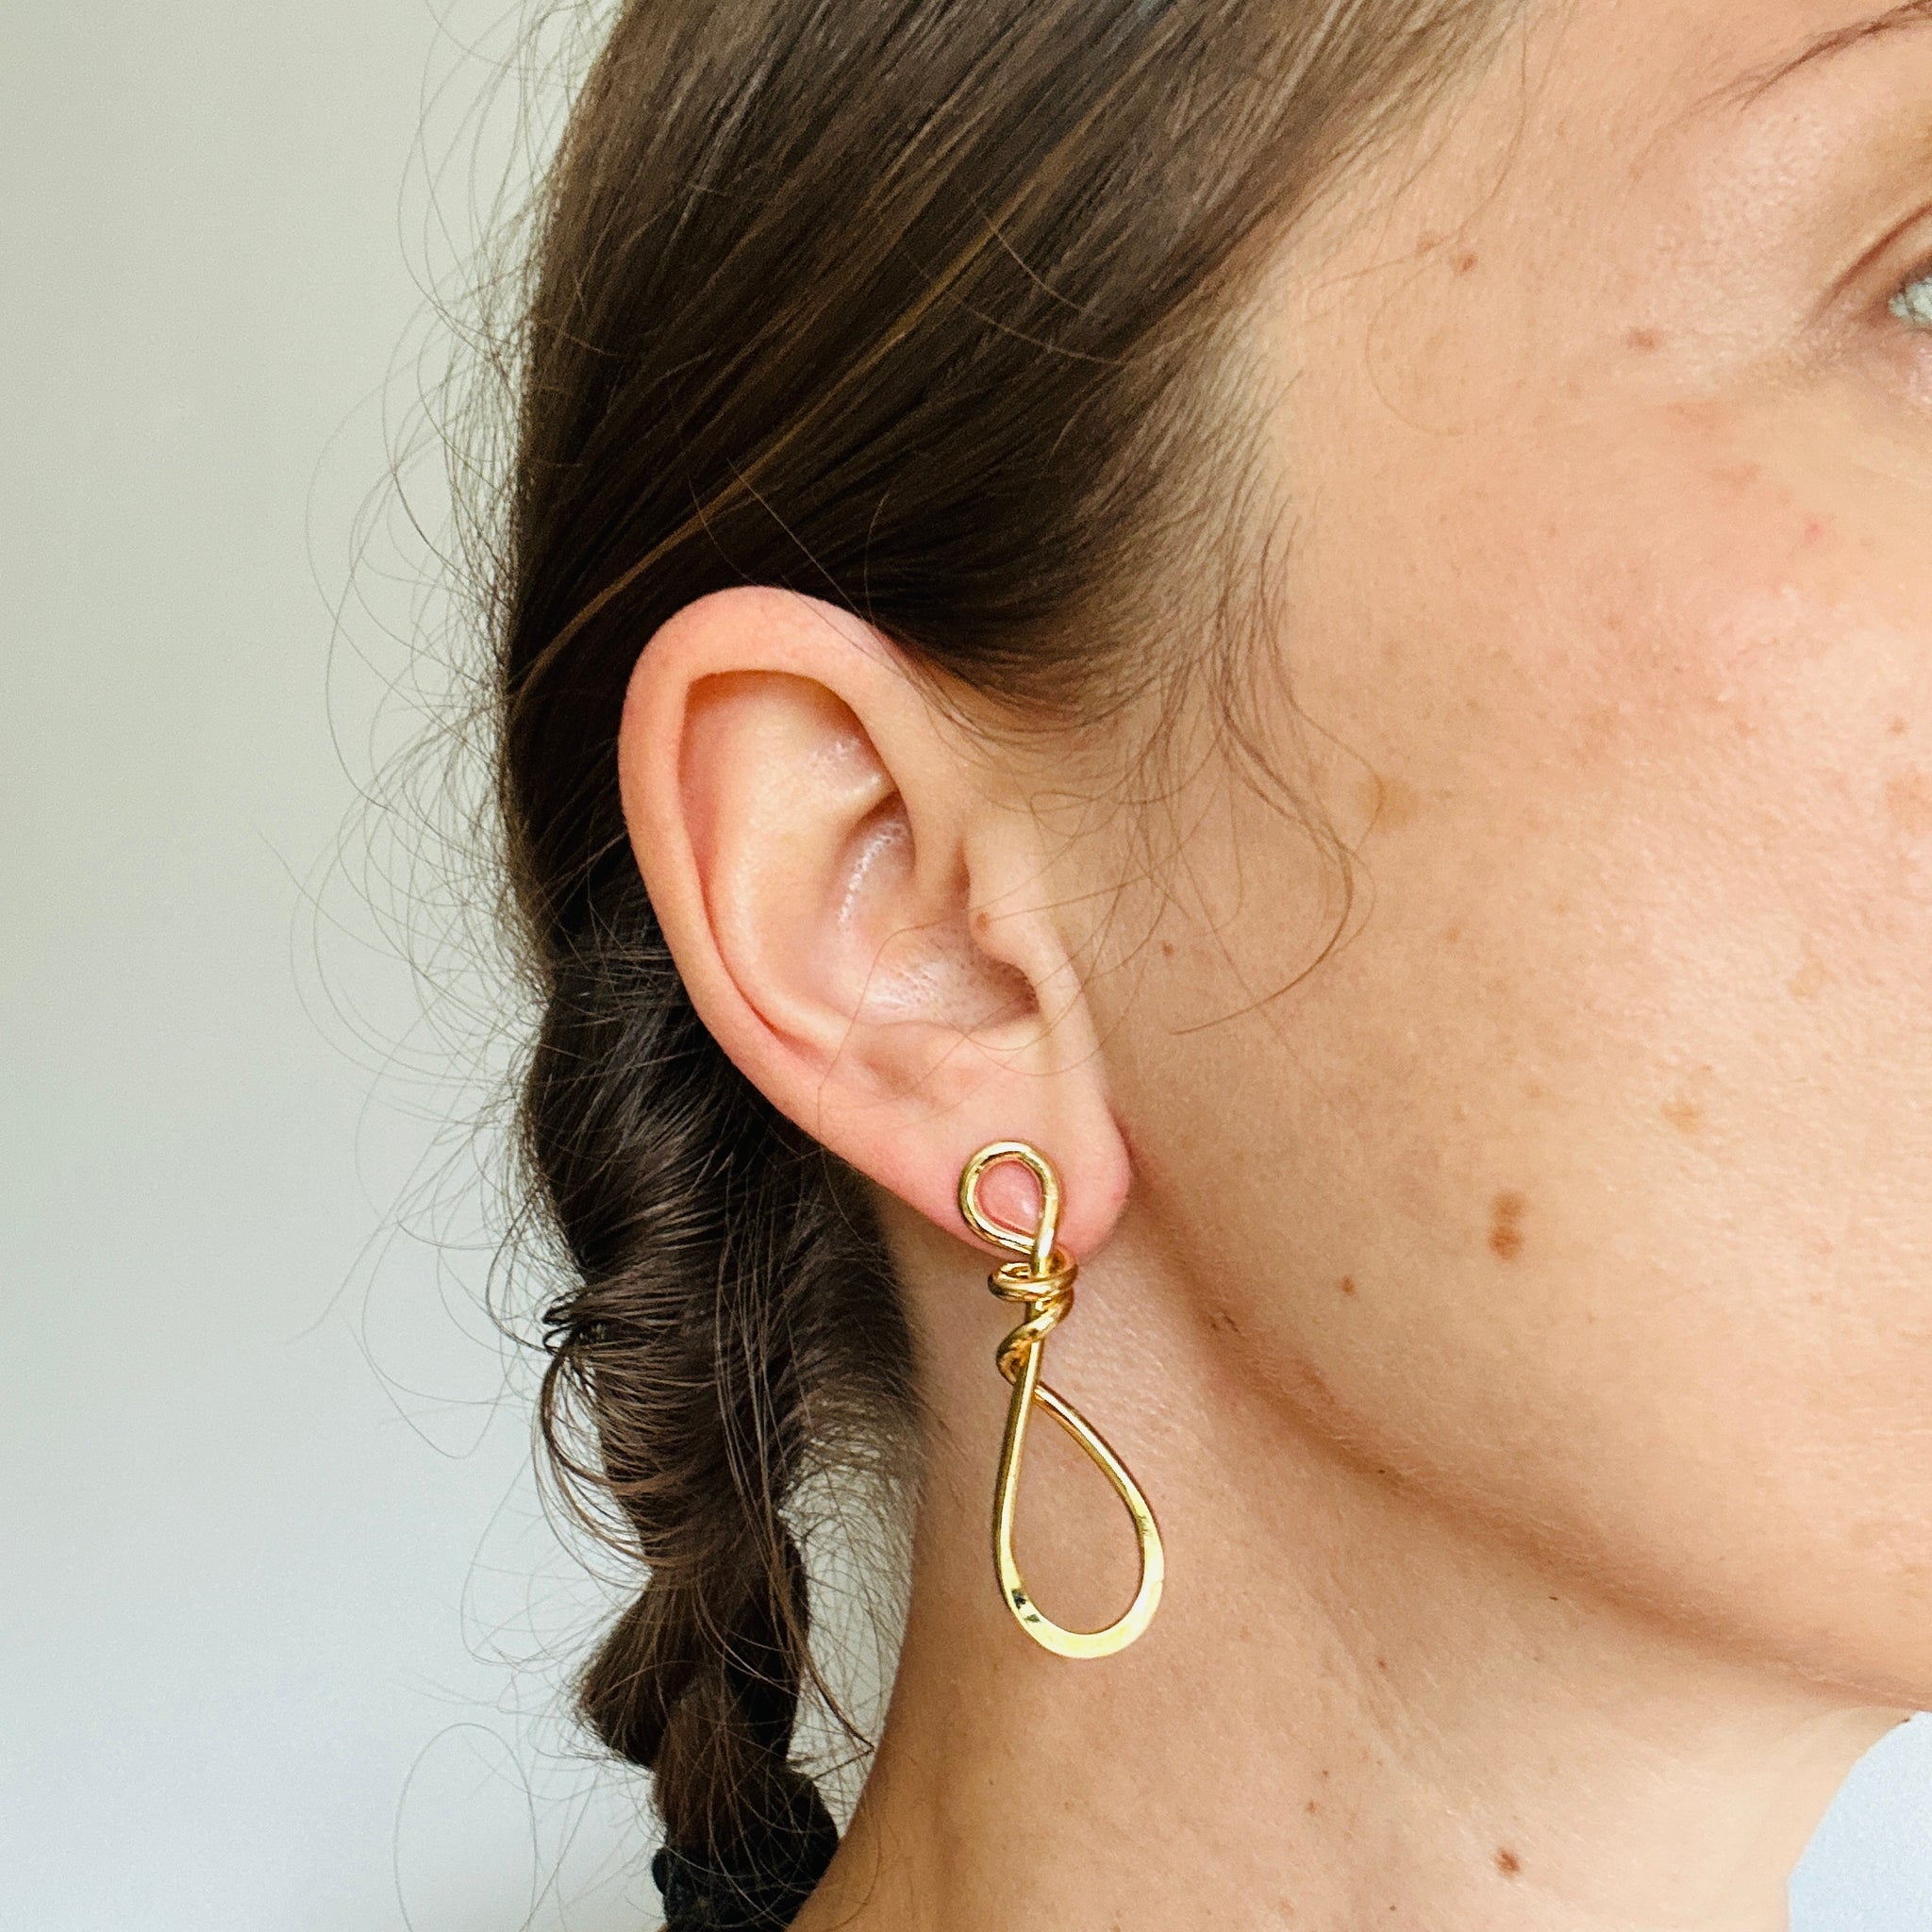 Clef earrings